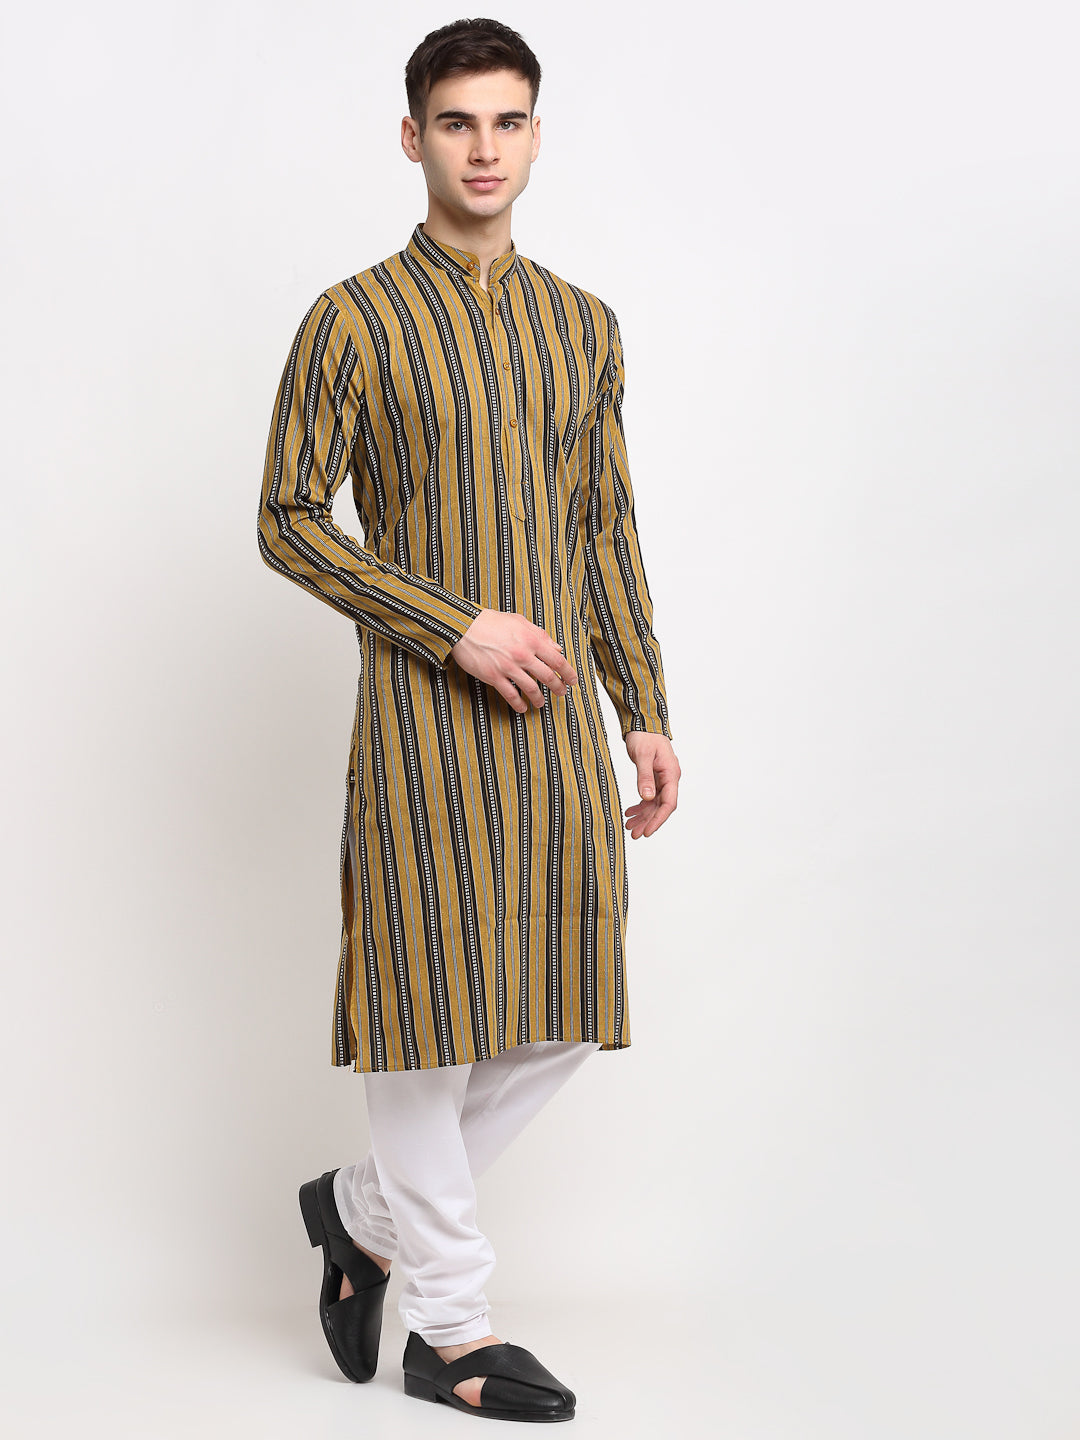 Jompers Men's Mustard Cotton Striped Kurta Payjama Sets